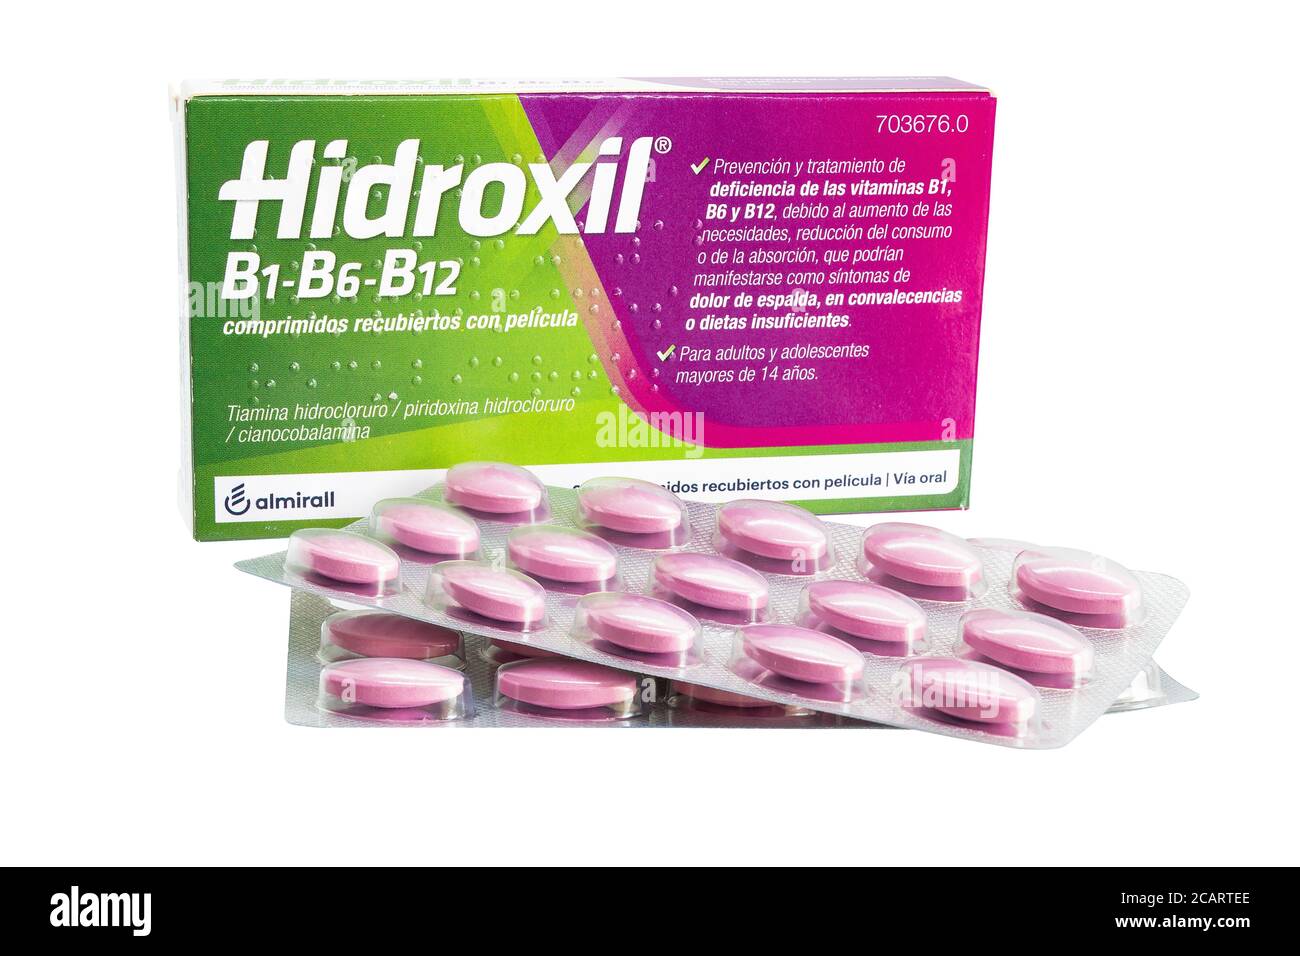 Huelva, Spain - July 23, 2020: Spanish Box of Hidroxil, brand of Vitamins B complex from Almirall laboratory. consists 3 types of vitamin B, B1 thiami Stock Photo